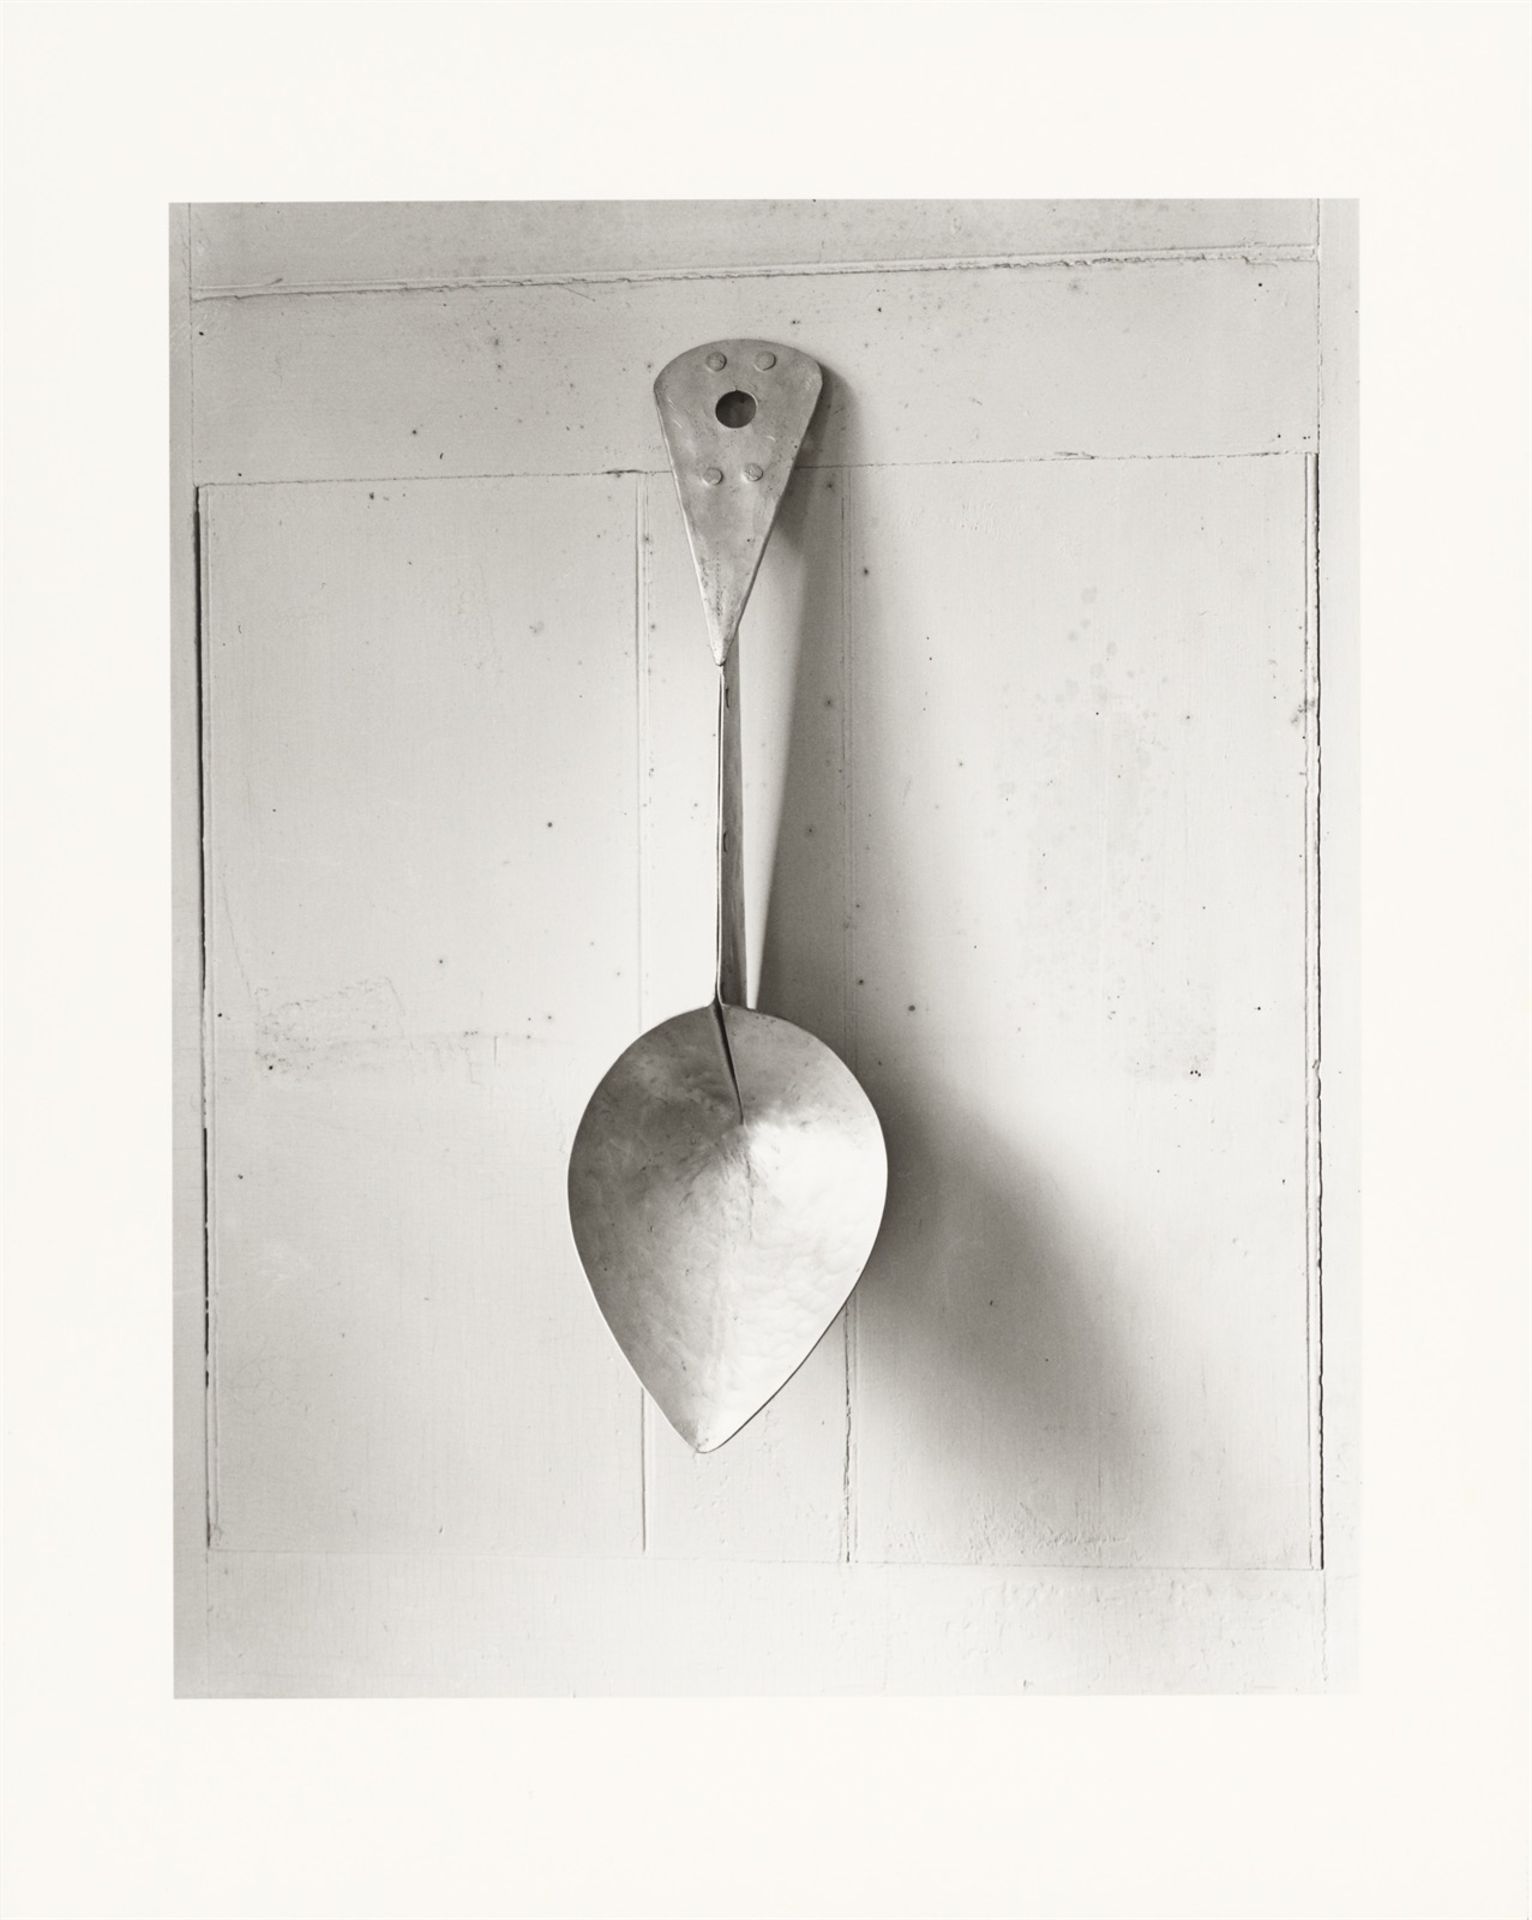 Evelyn Hofer. ”Calder Spoon, Roxbury”. 1976 - Image 2 of 2